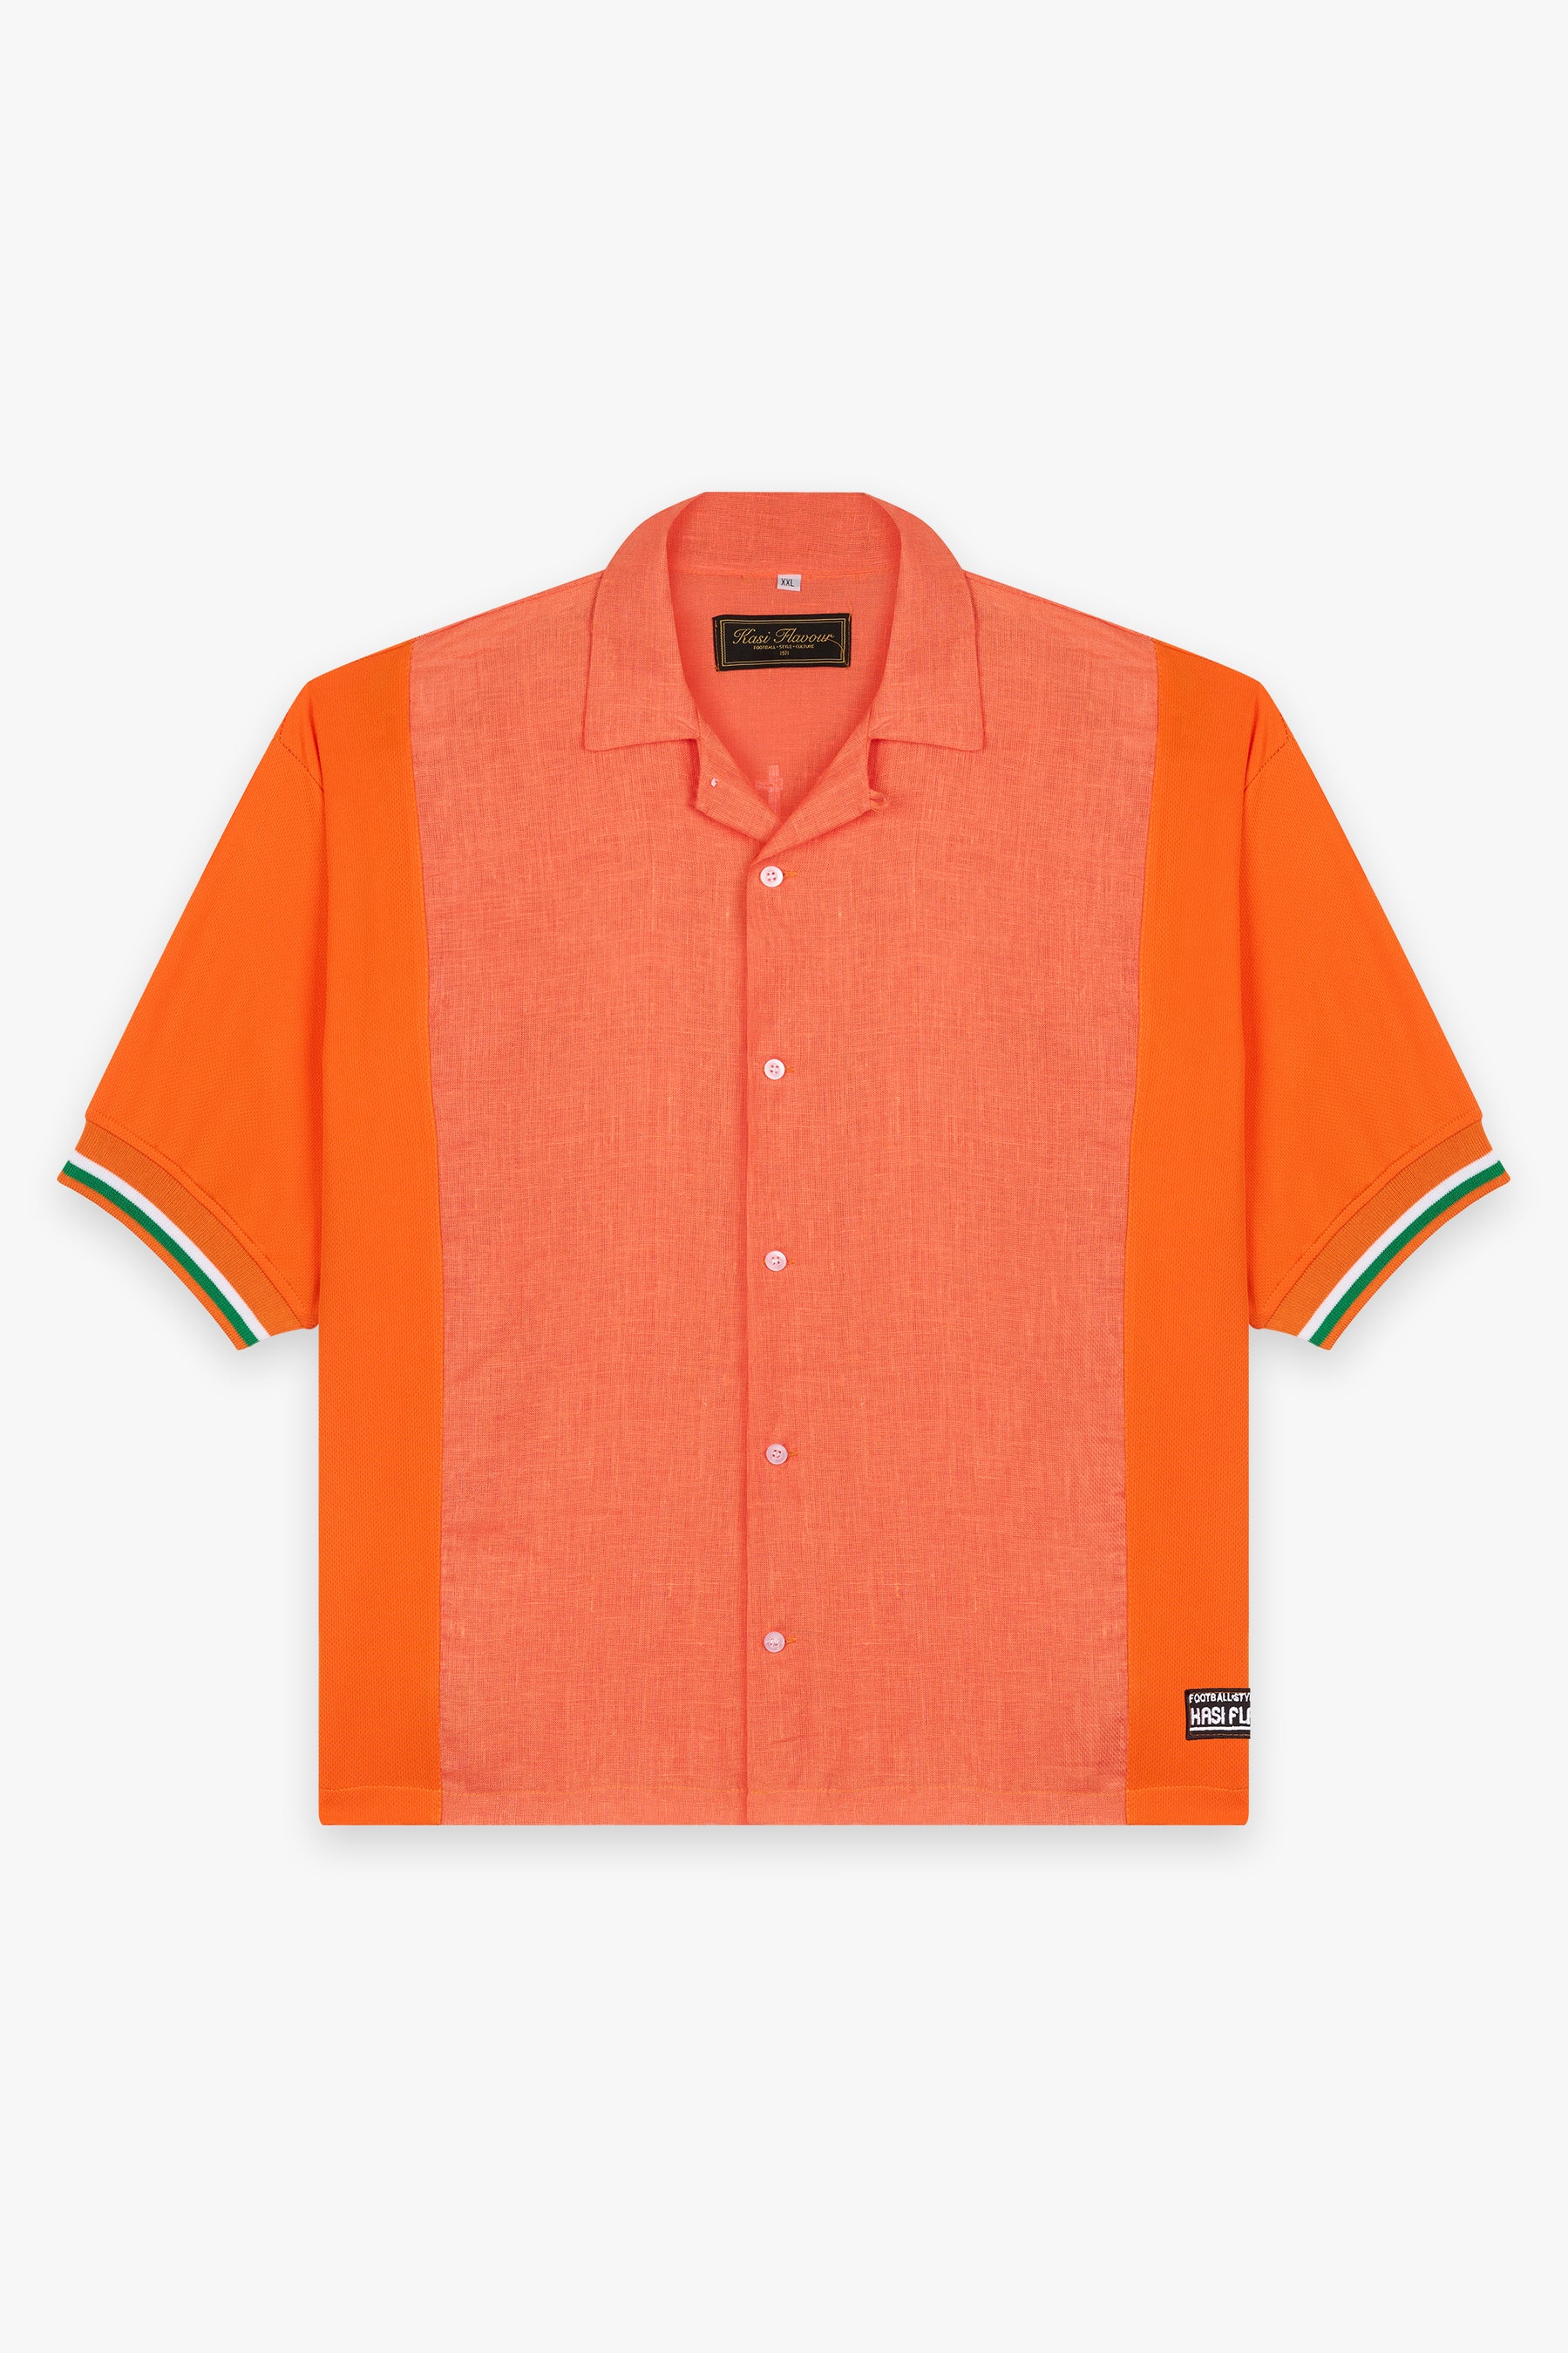 Yaya Toure Hybrid Football Jersey Shirt Orange